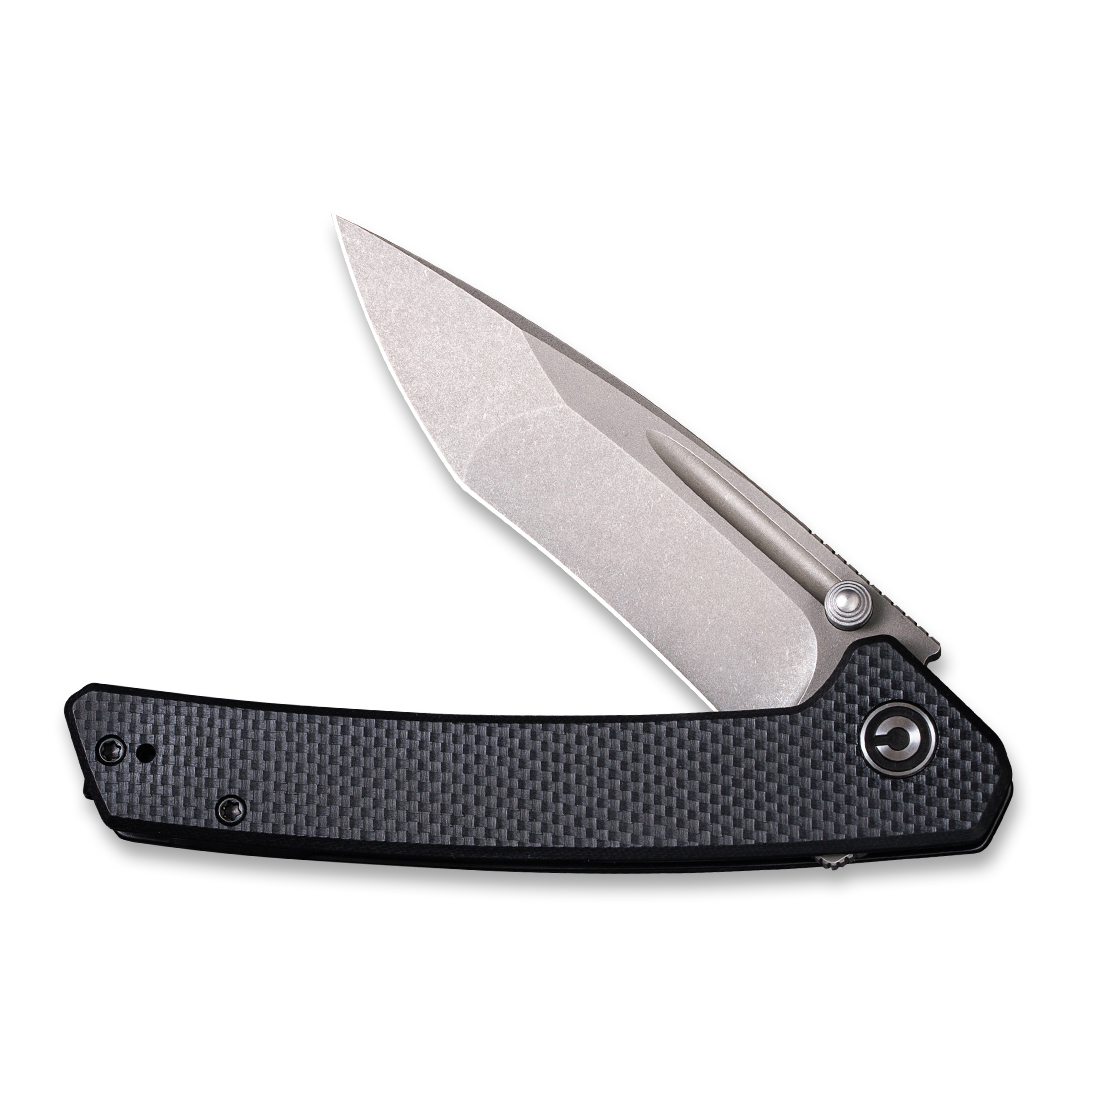 CIVIVI Keen Nadder Liner Lock C2021A Knife N690 Stainless Steel & Black G10 Pocket Knives